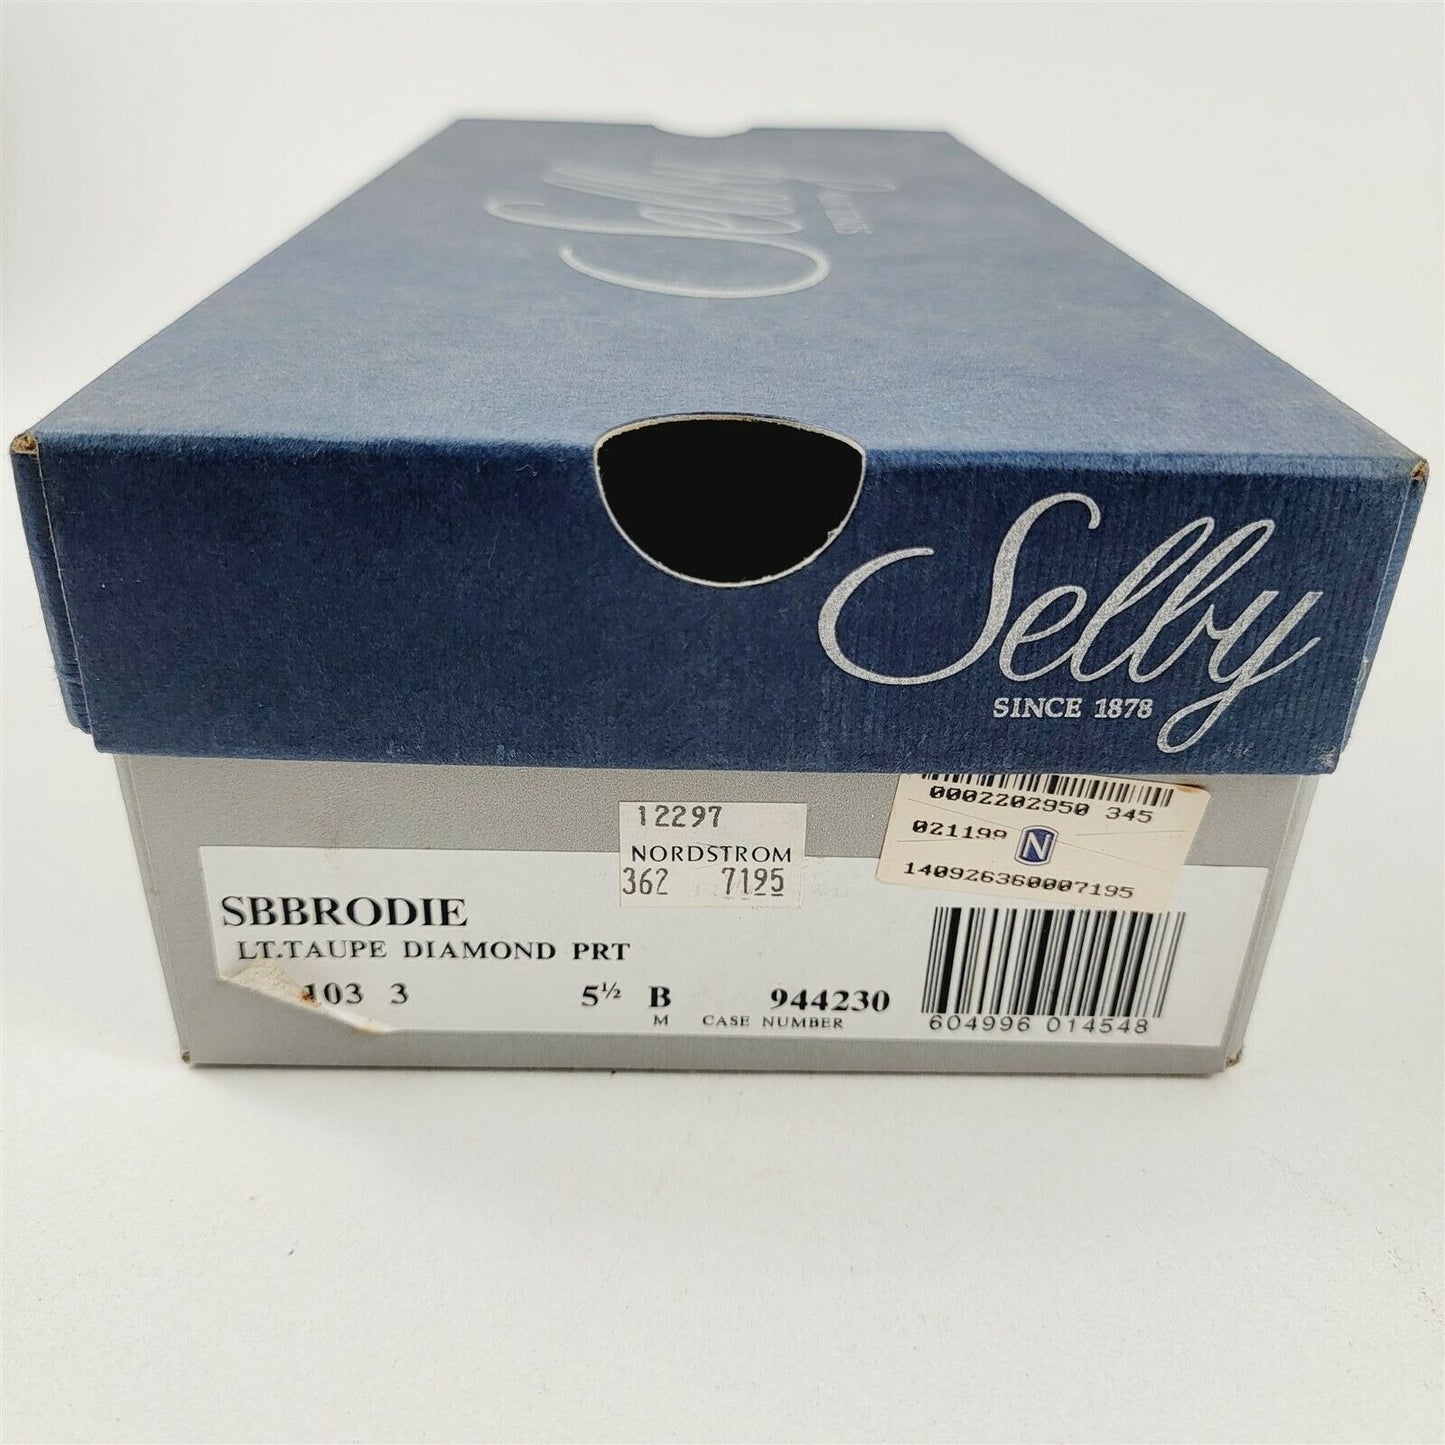 Selby Vintage Block Heel Shoes Cream Geometric Womens Size 5.5